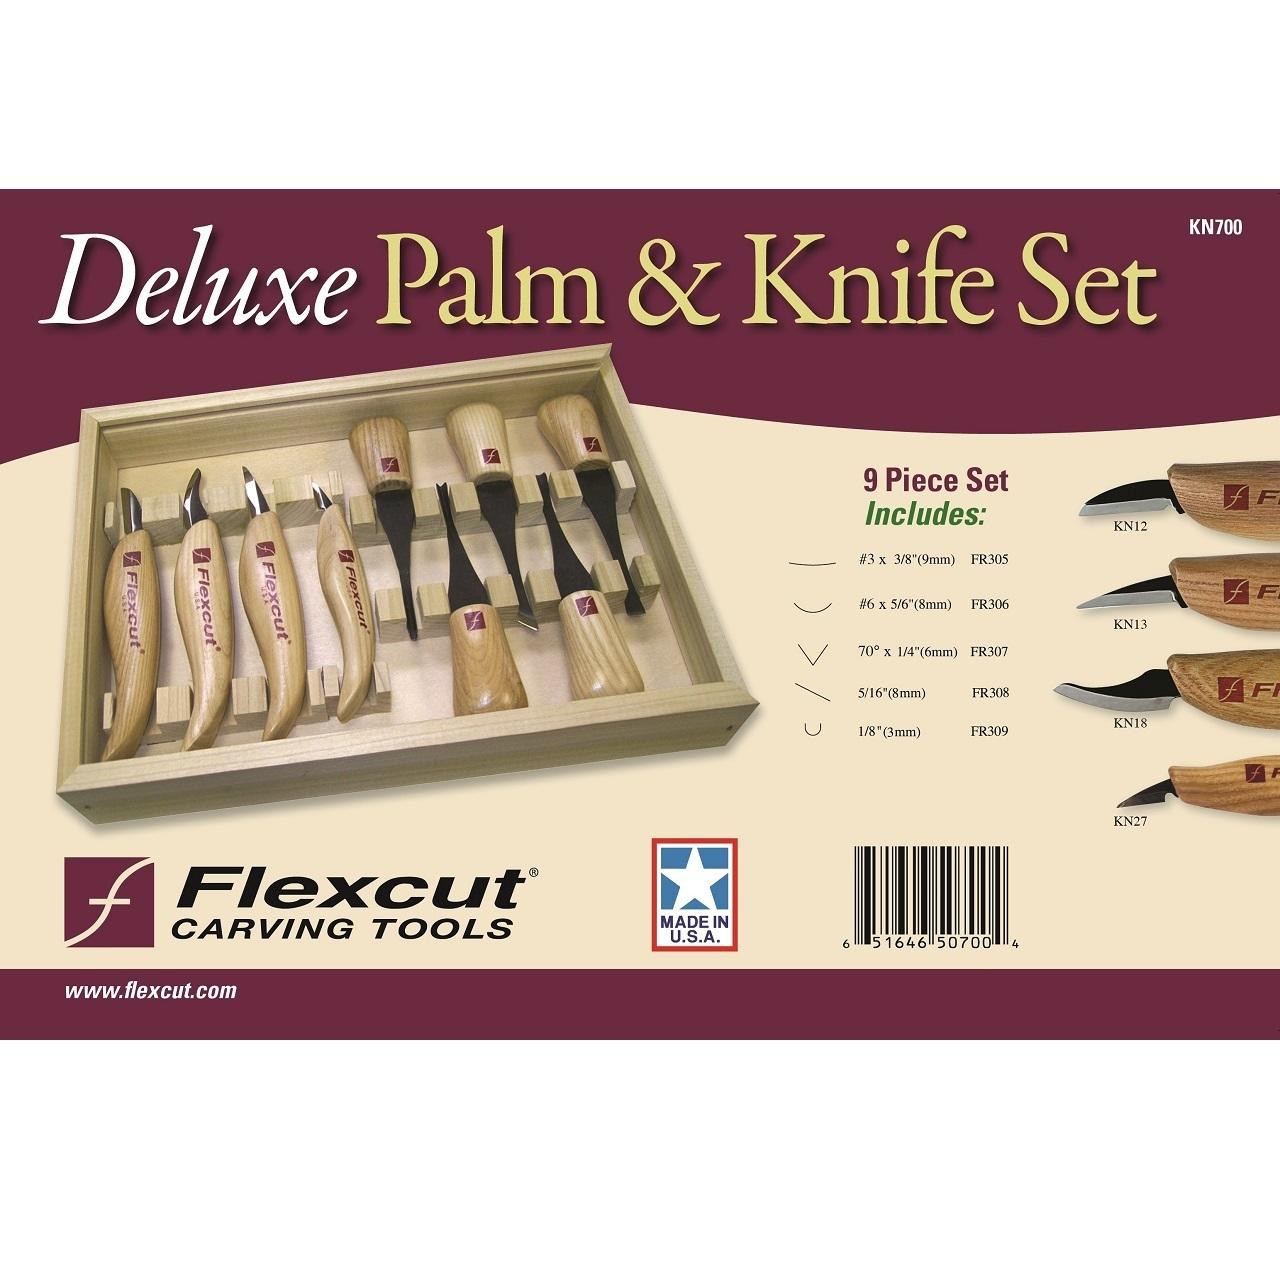 KN12 Cutting Knife - Flexcut Tool Company